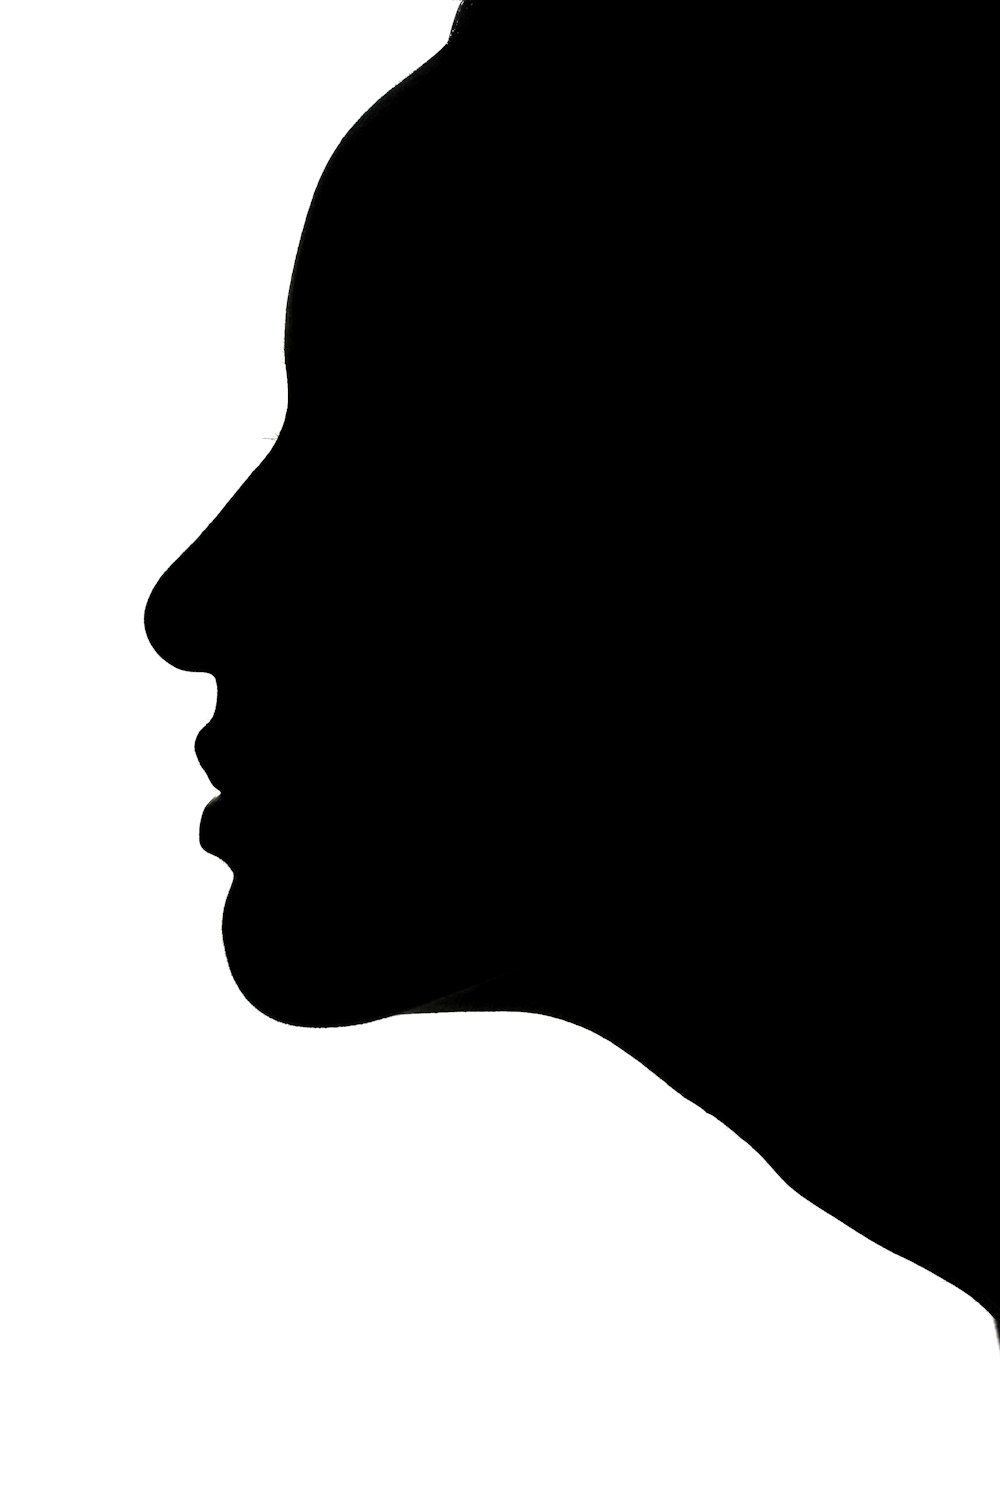 black face silhouette